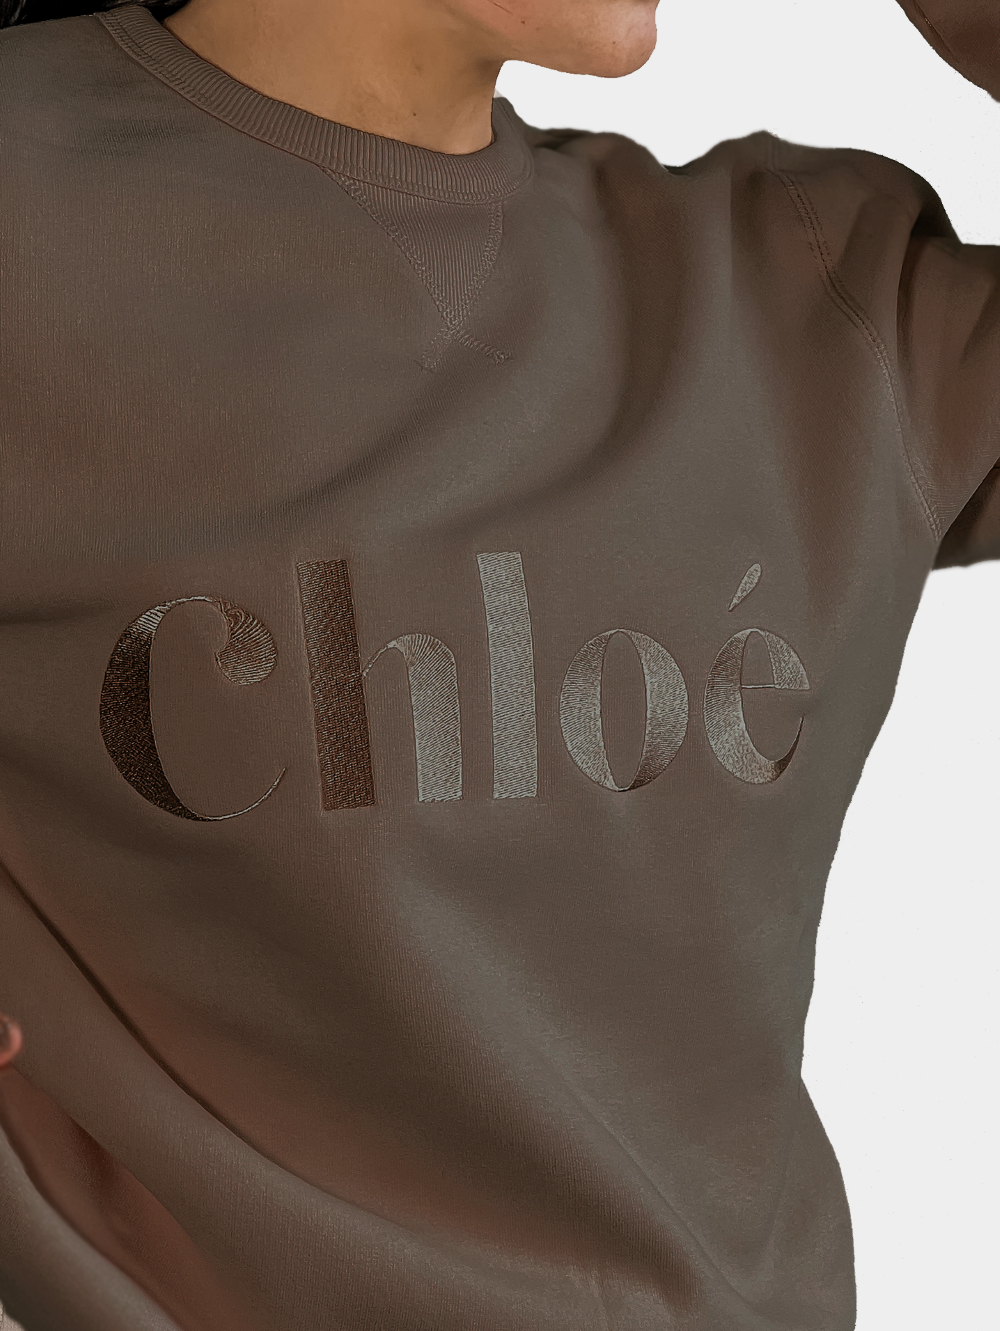 Out The Purse UK Clo Women's Sweatshirt in Chocolate